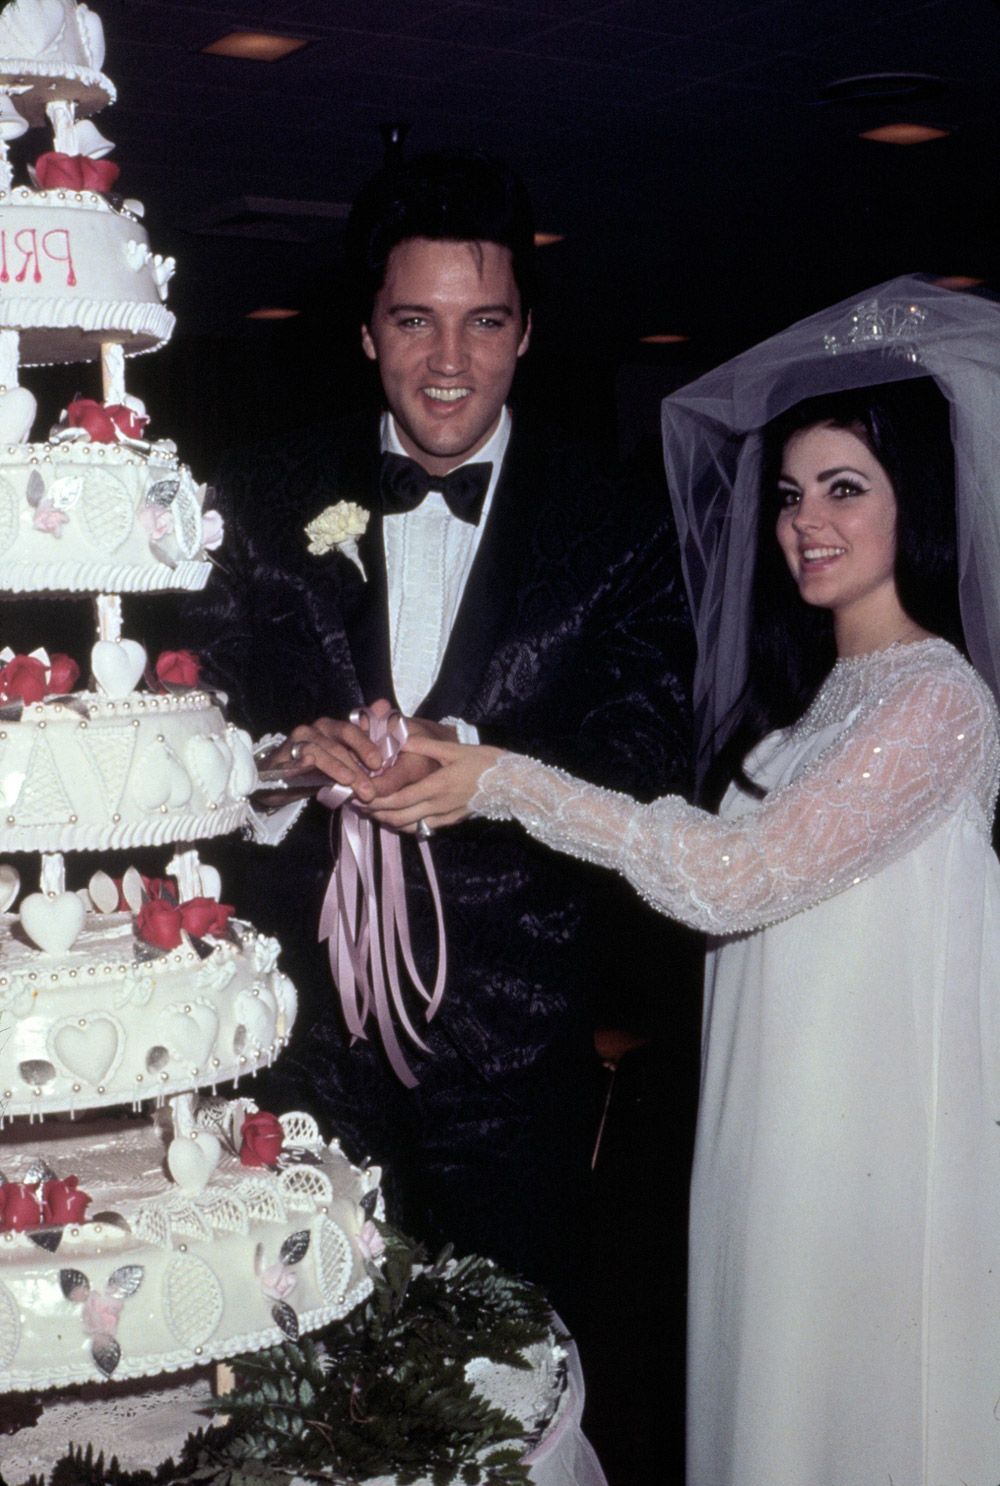 elvis and priscilla wedding cake